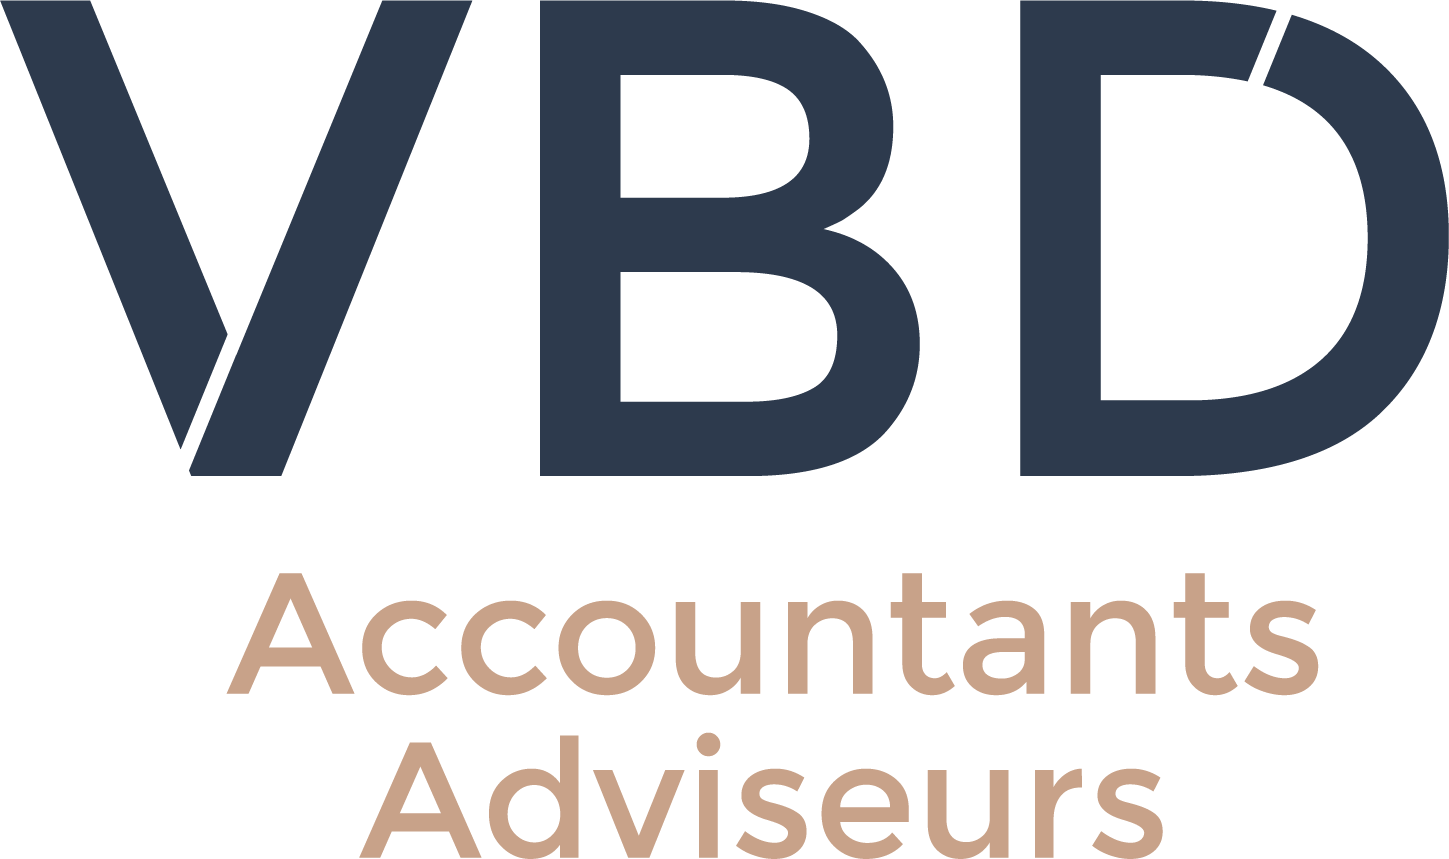 VBD Accountants